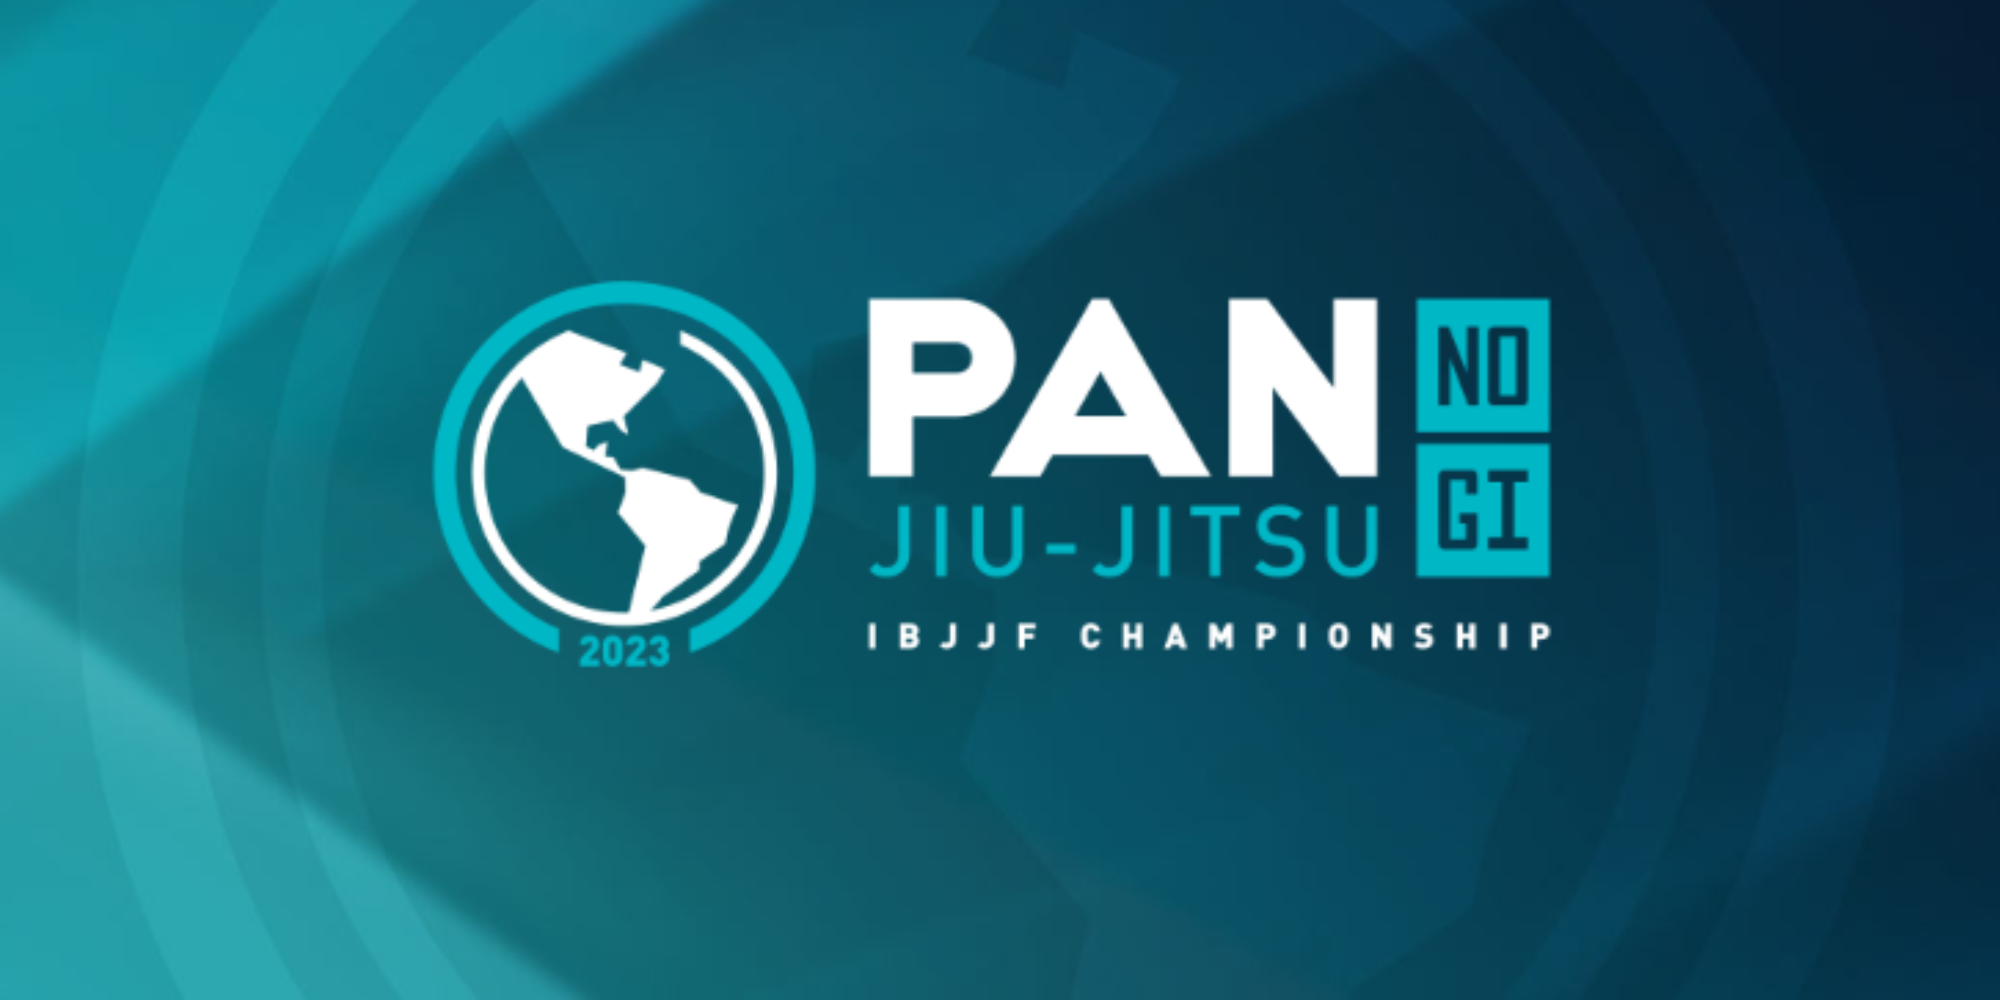 IBJJF 2019 World Championship Results